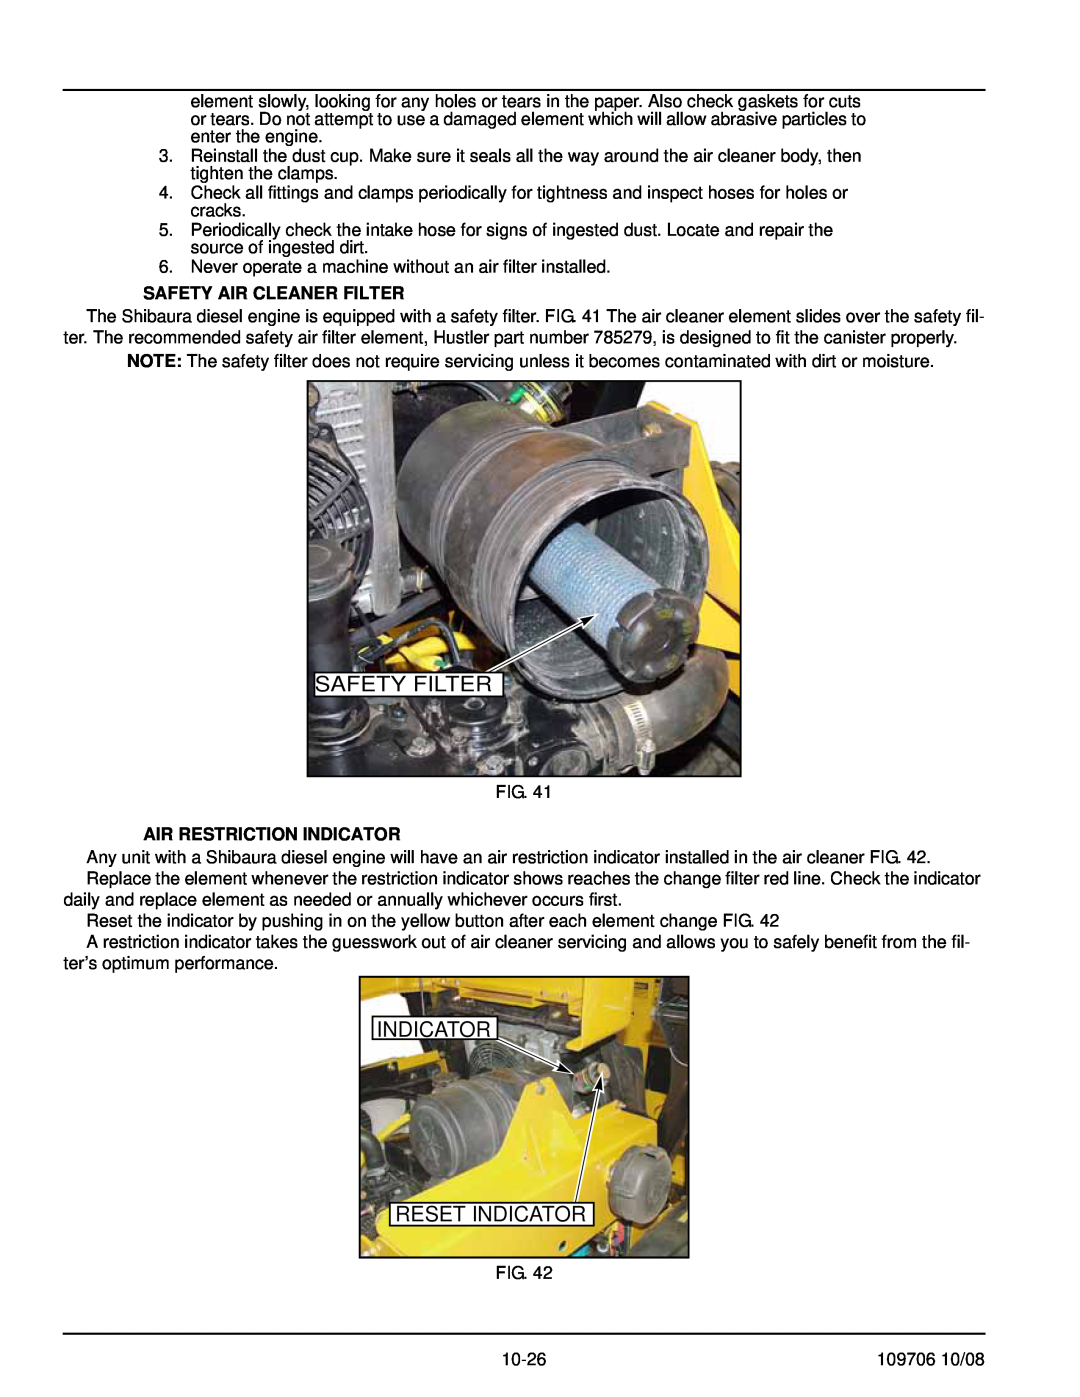 Hustler Turf Diesel Z manual Safety Filter, Indicator Reset Indicator, Safety Air Cleaner Filter, Air Restriction Indicator 